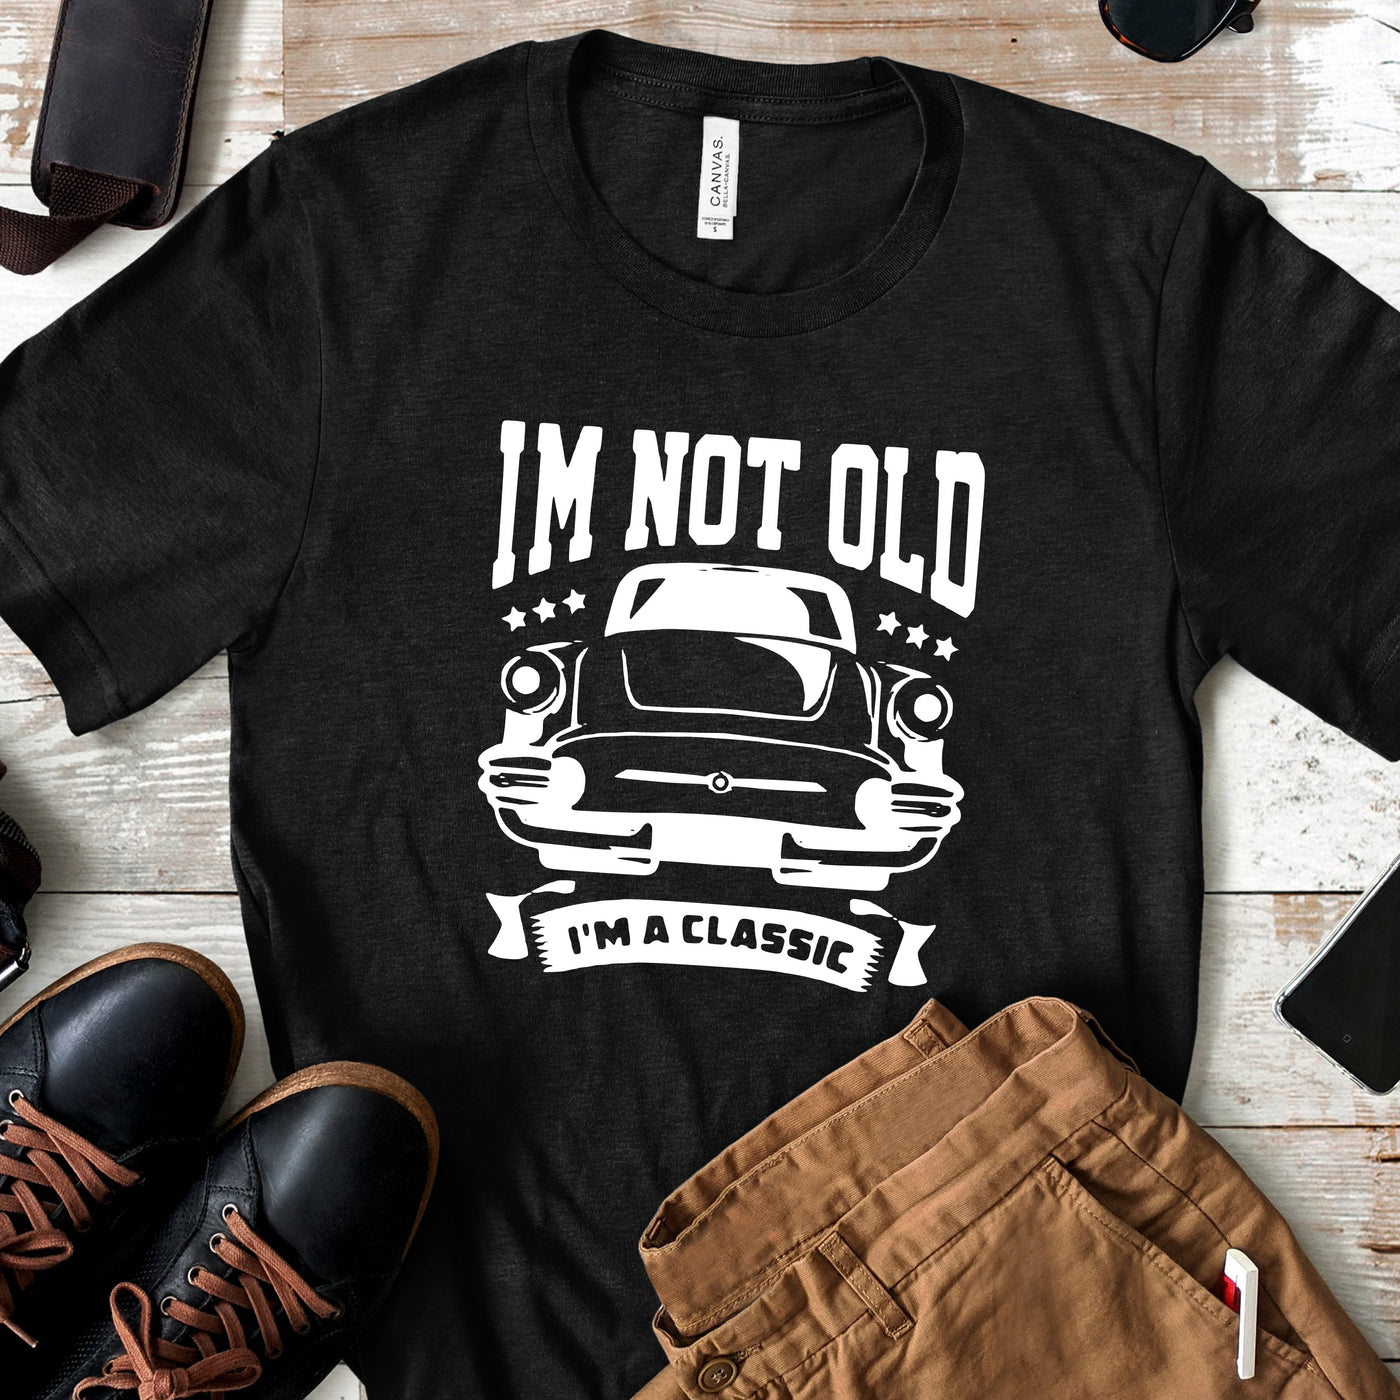 I'm Not Old I'm a Classic Birthday Shirt | Men's Funny Birthday Tee